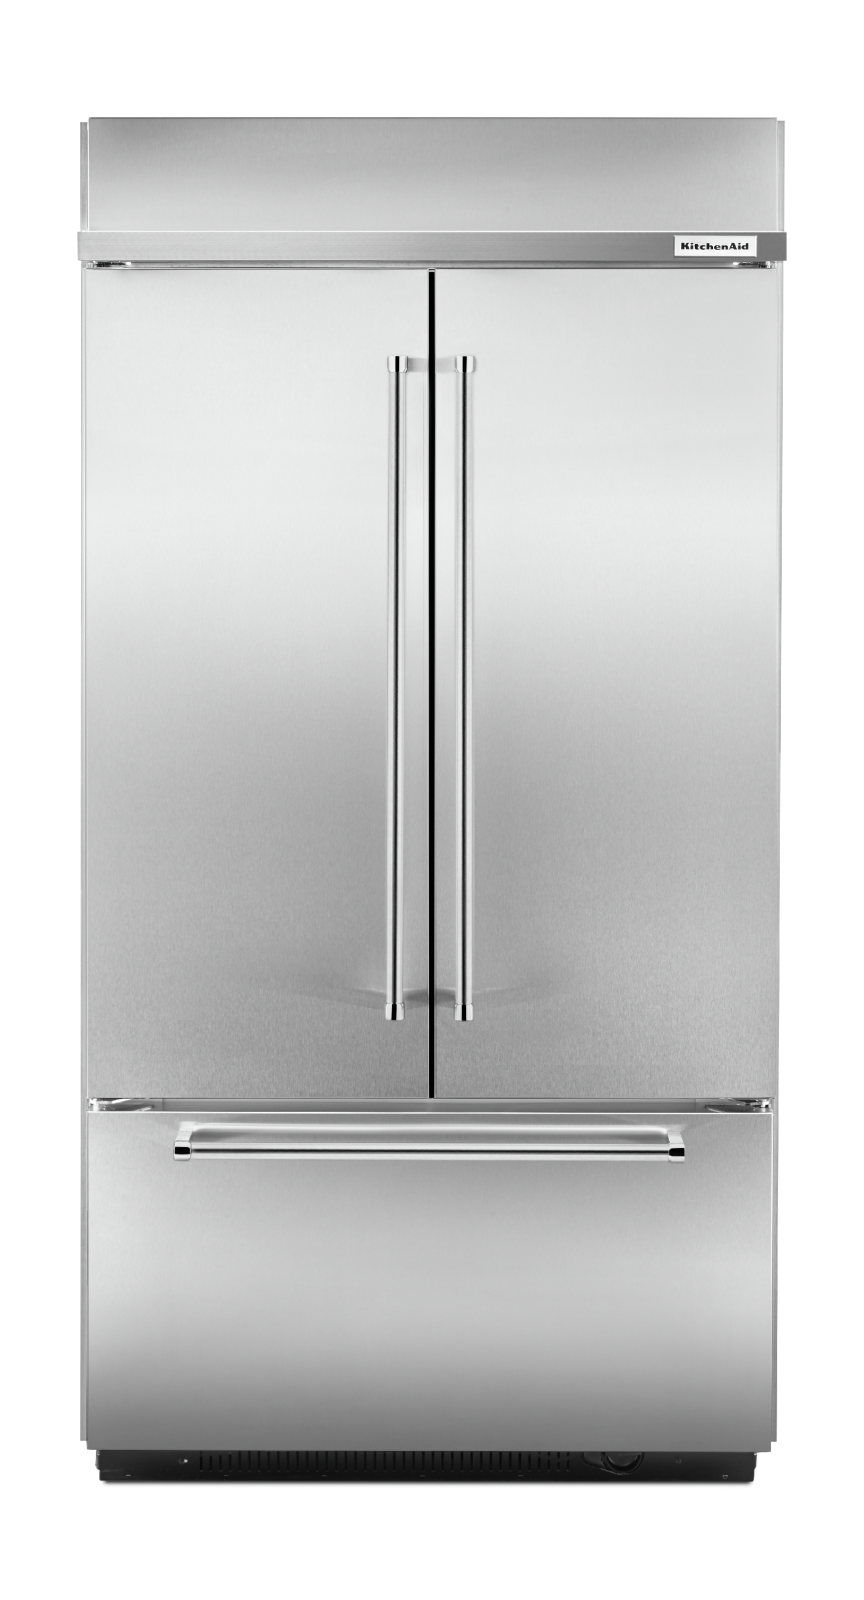 KitchenAid - 42.25 Inch 24.17 cu. ft French Door Refrigerator in Stainless - KBFN402ESS